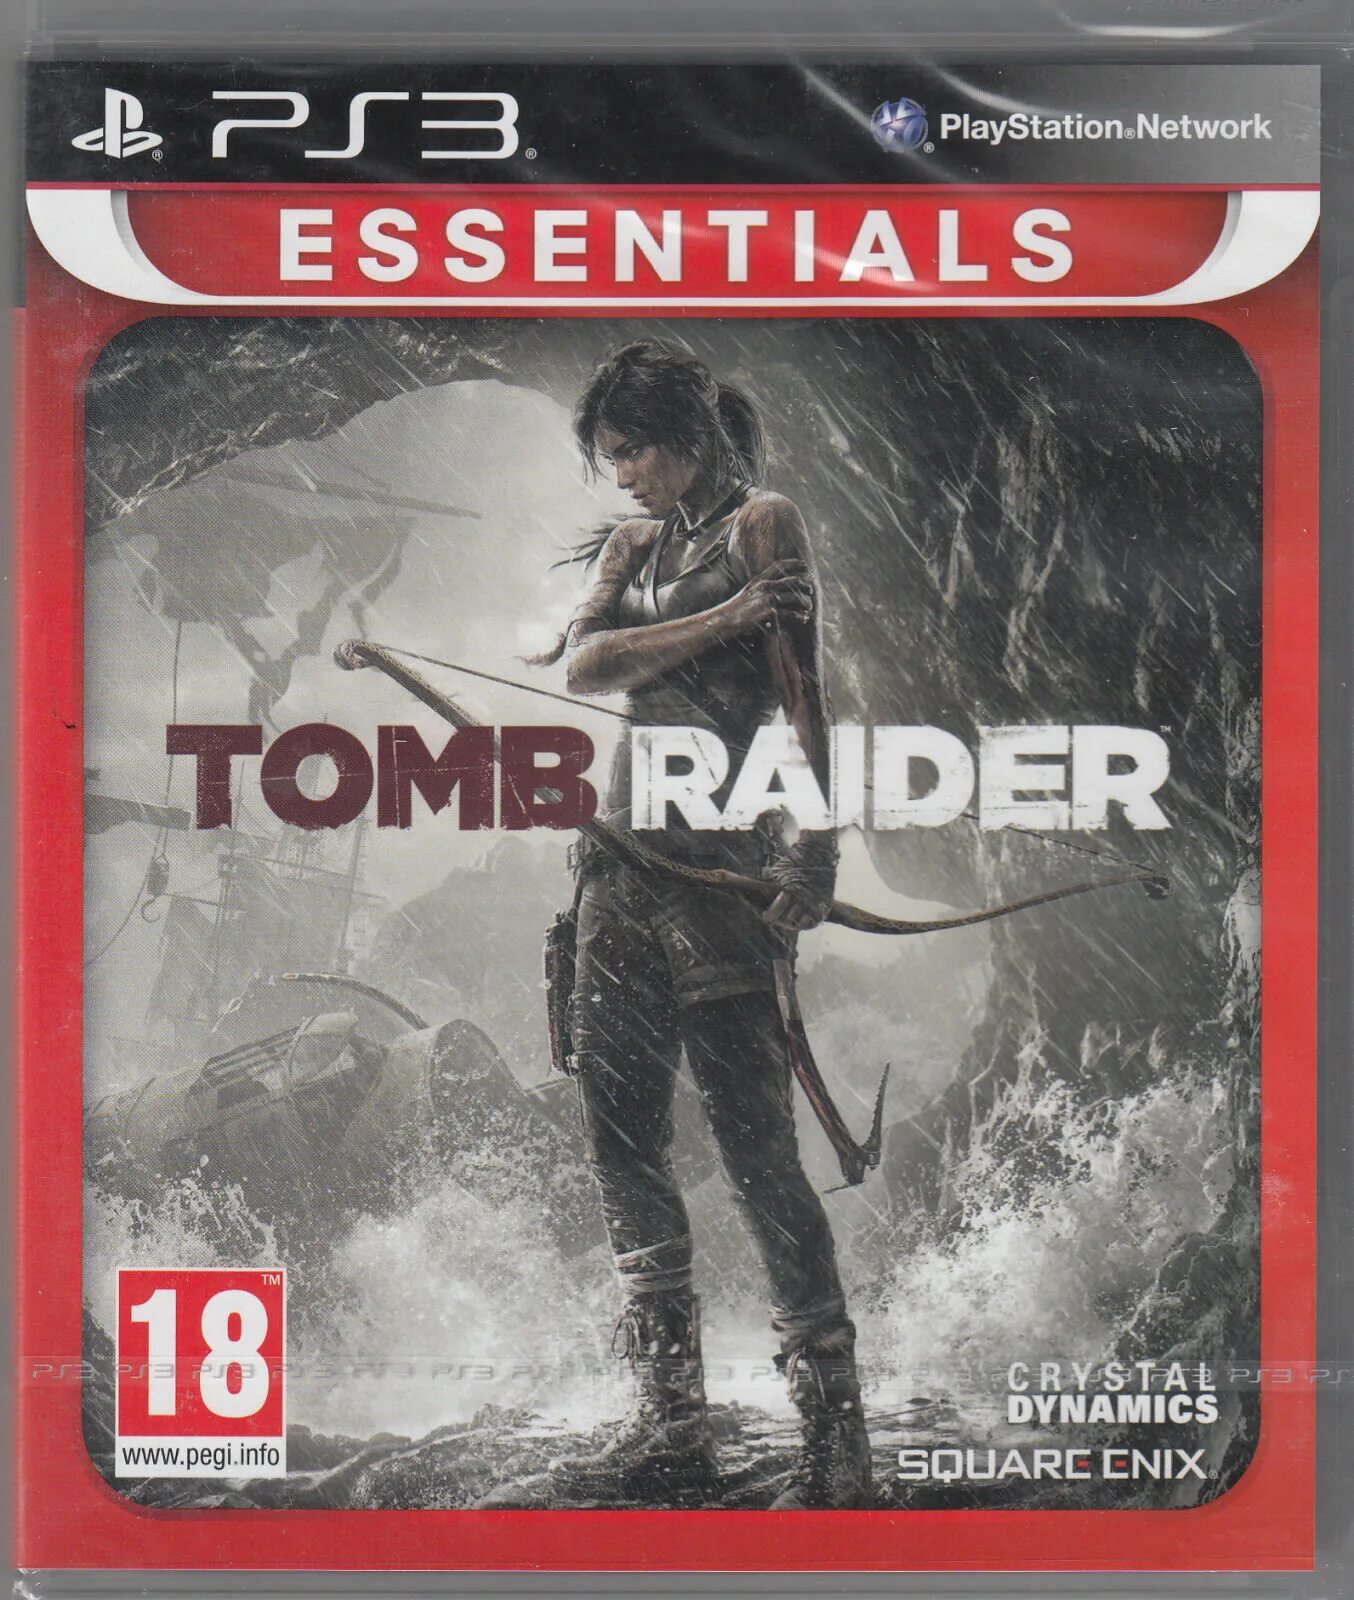 Томб Райдер хбокс 360. Tomb Raider 2013 ps3 обложка. Том Райдер на хбокс 360. Ps3 2013